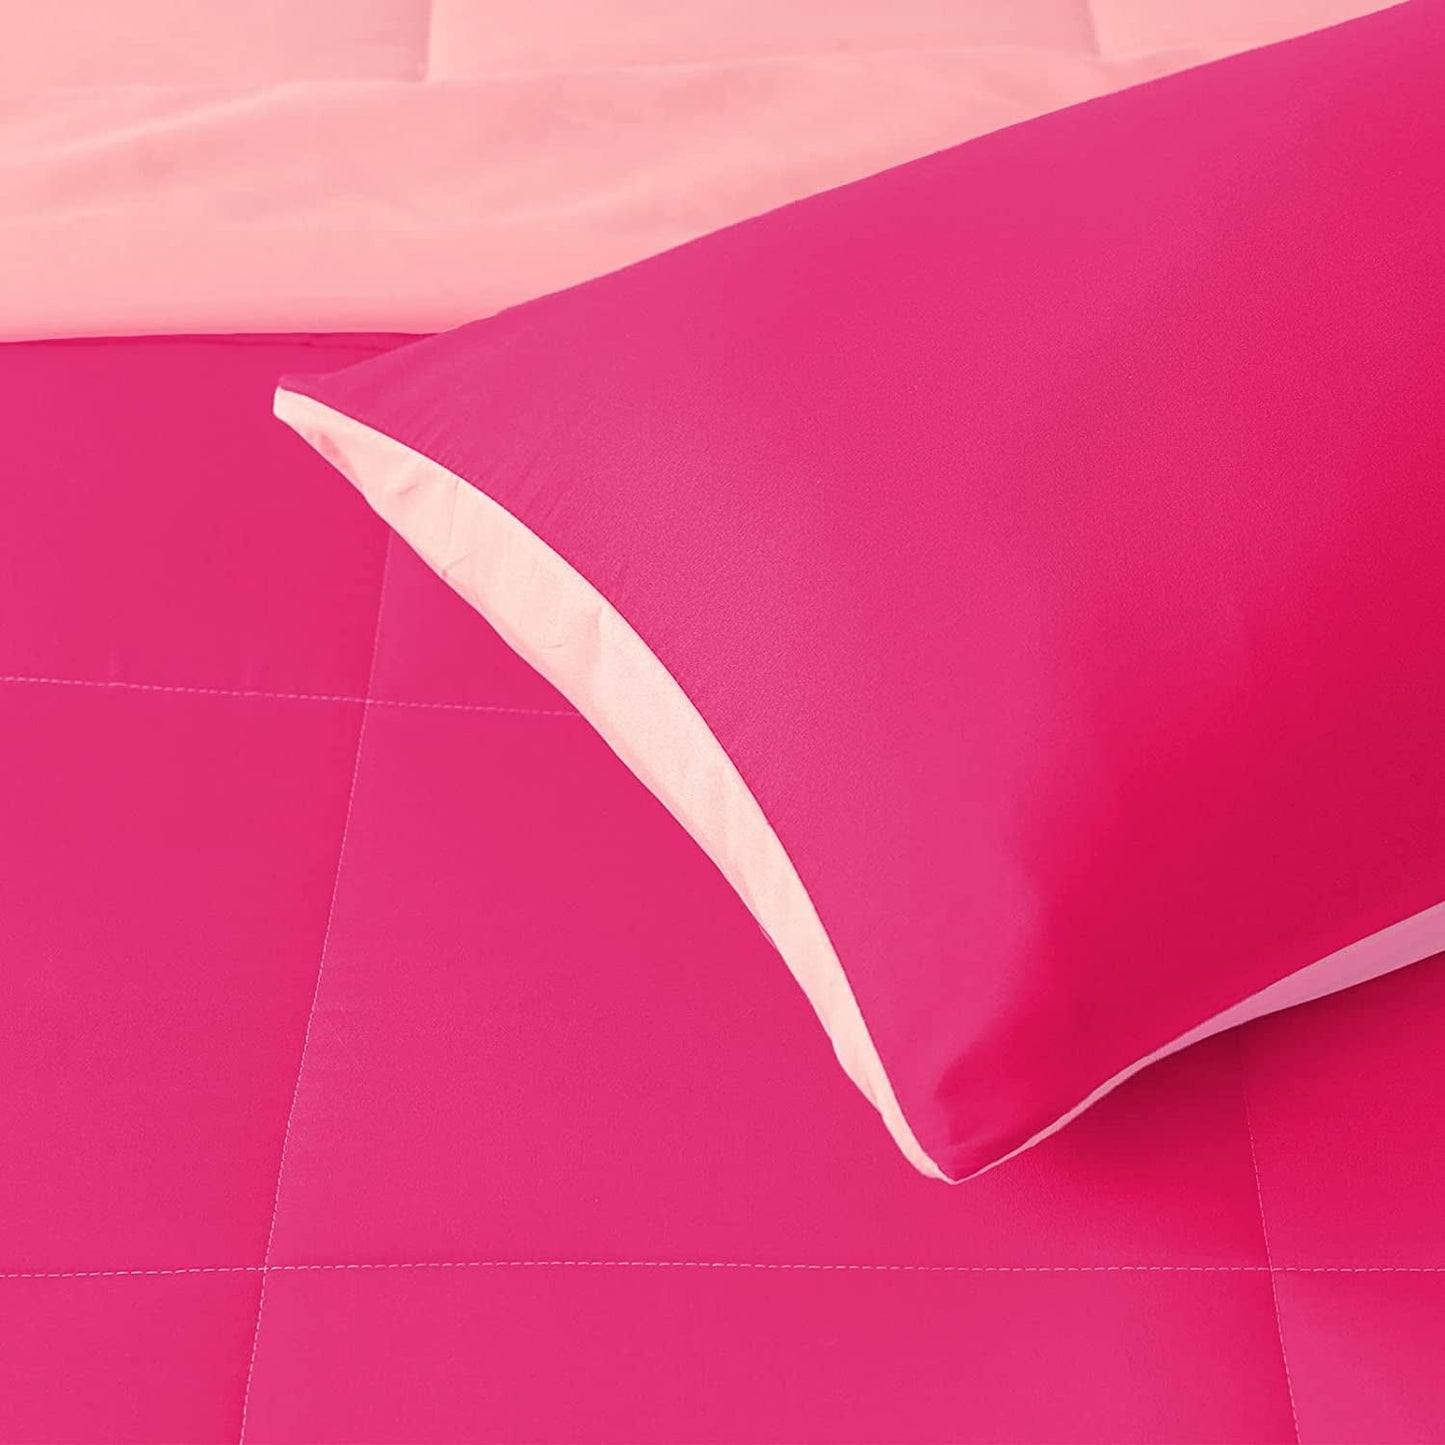 Exclusivo Mezcla Lightweight Reversible 3-Piece Comforter Set All Seasons, Down Alternative Comforter with 2 Pillow Shams, Queen Size, Hot Pink/ Blush Pink